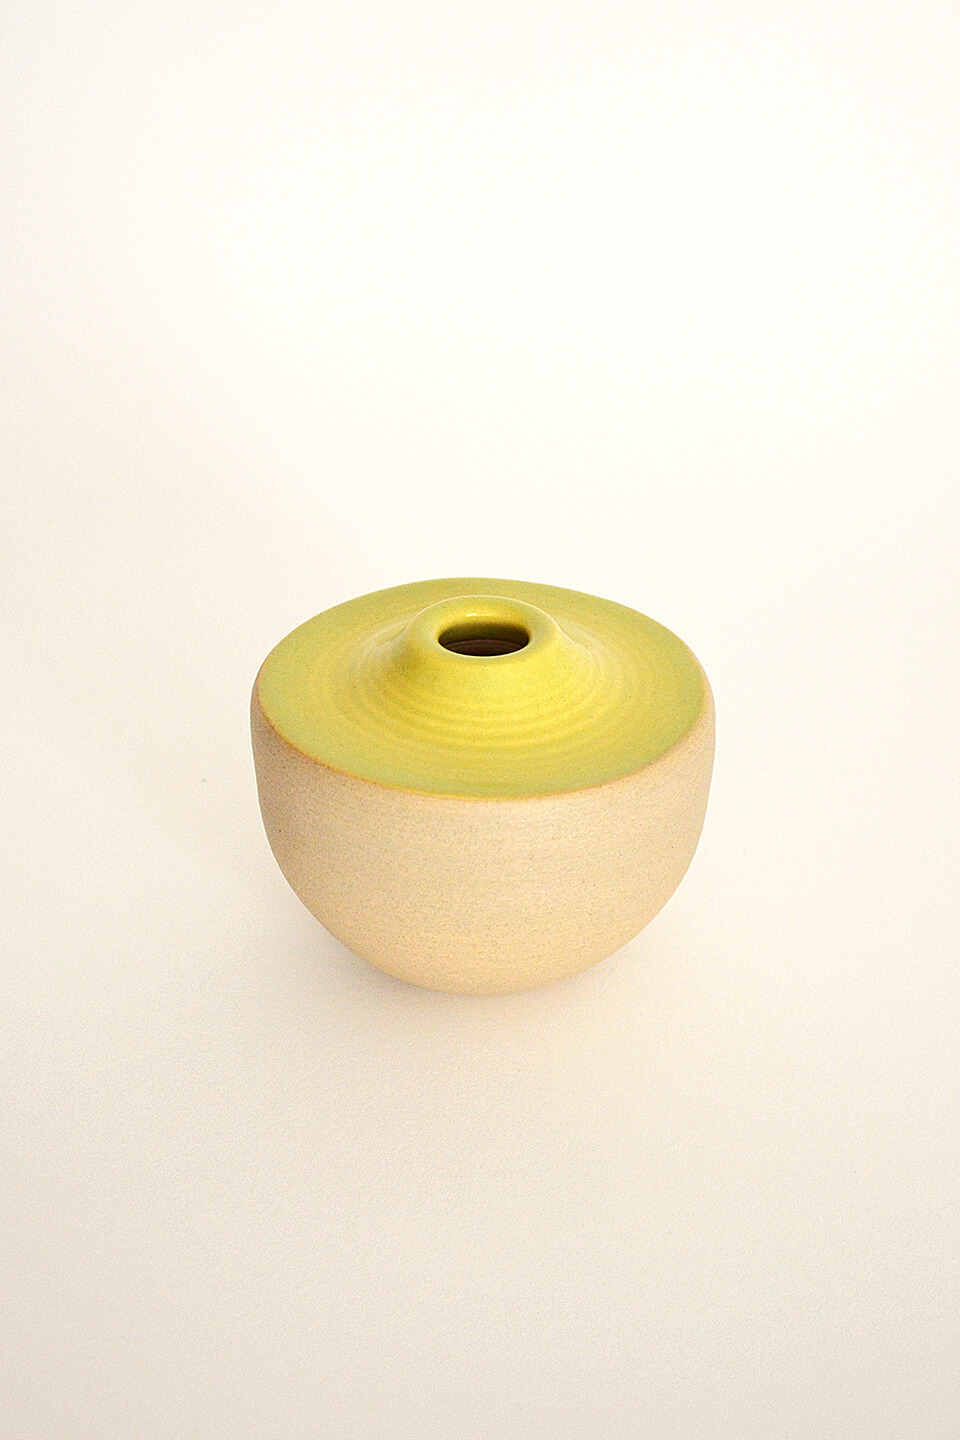 Satin Yellow Green Ceramic Vase No. 641